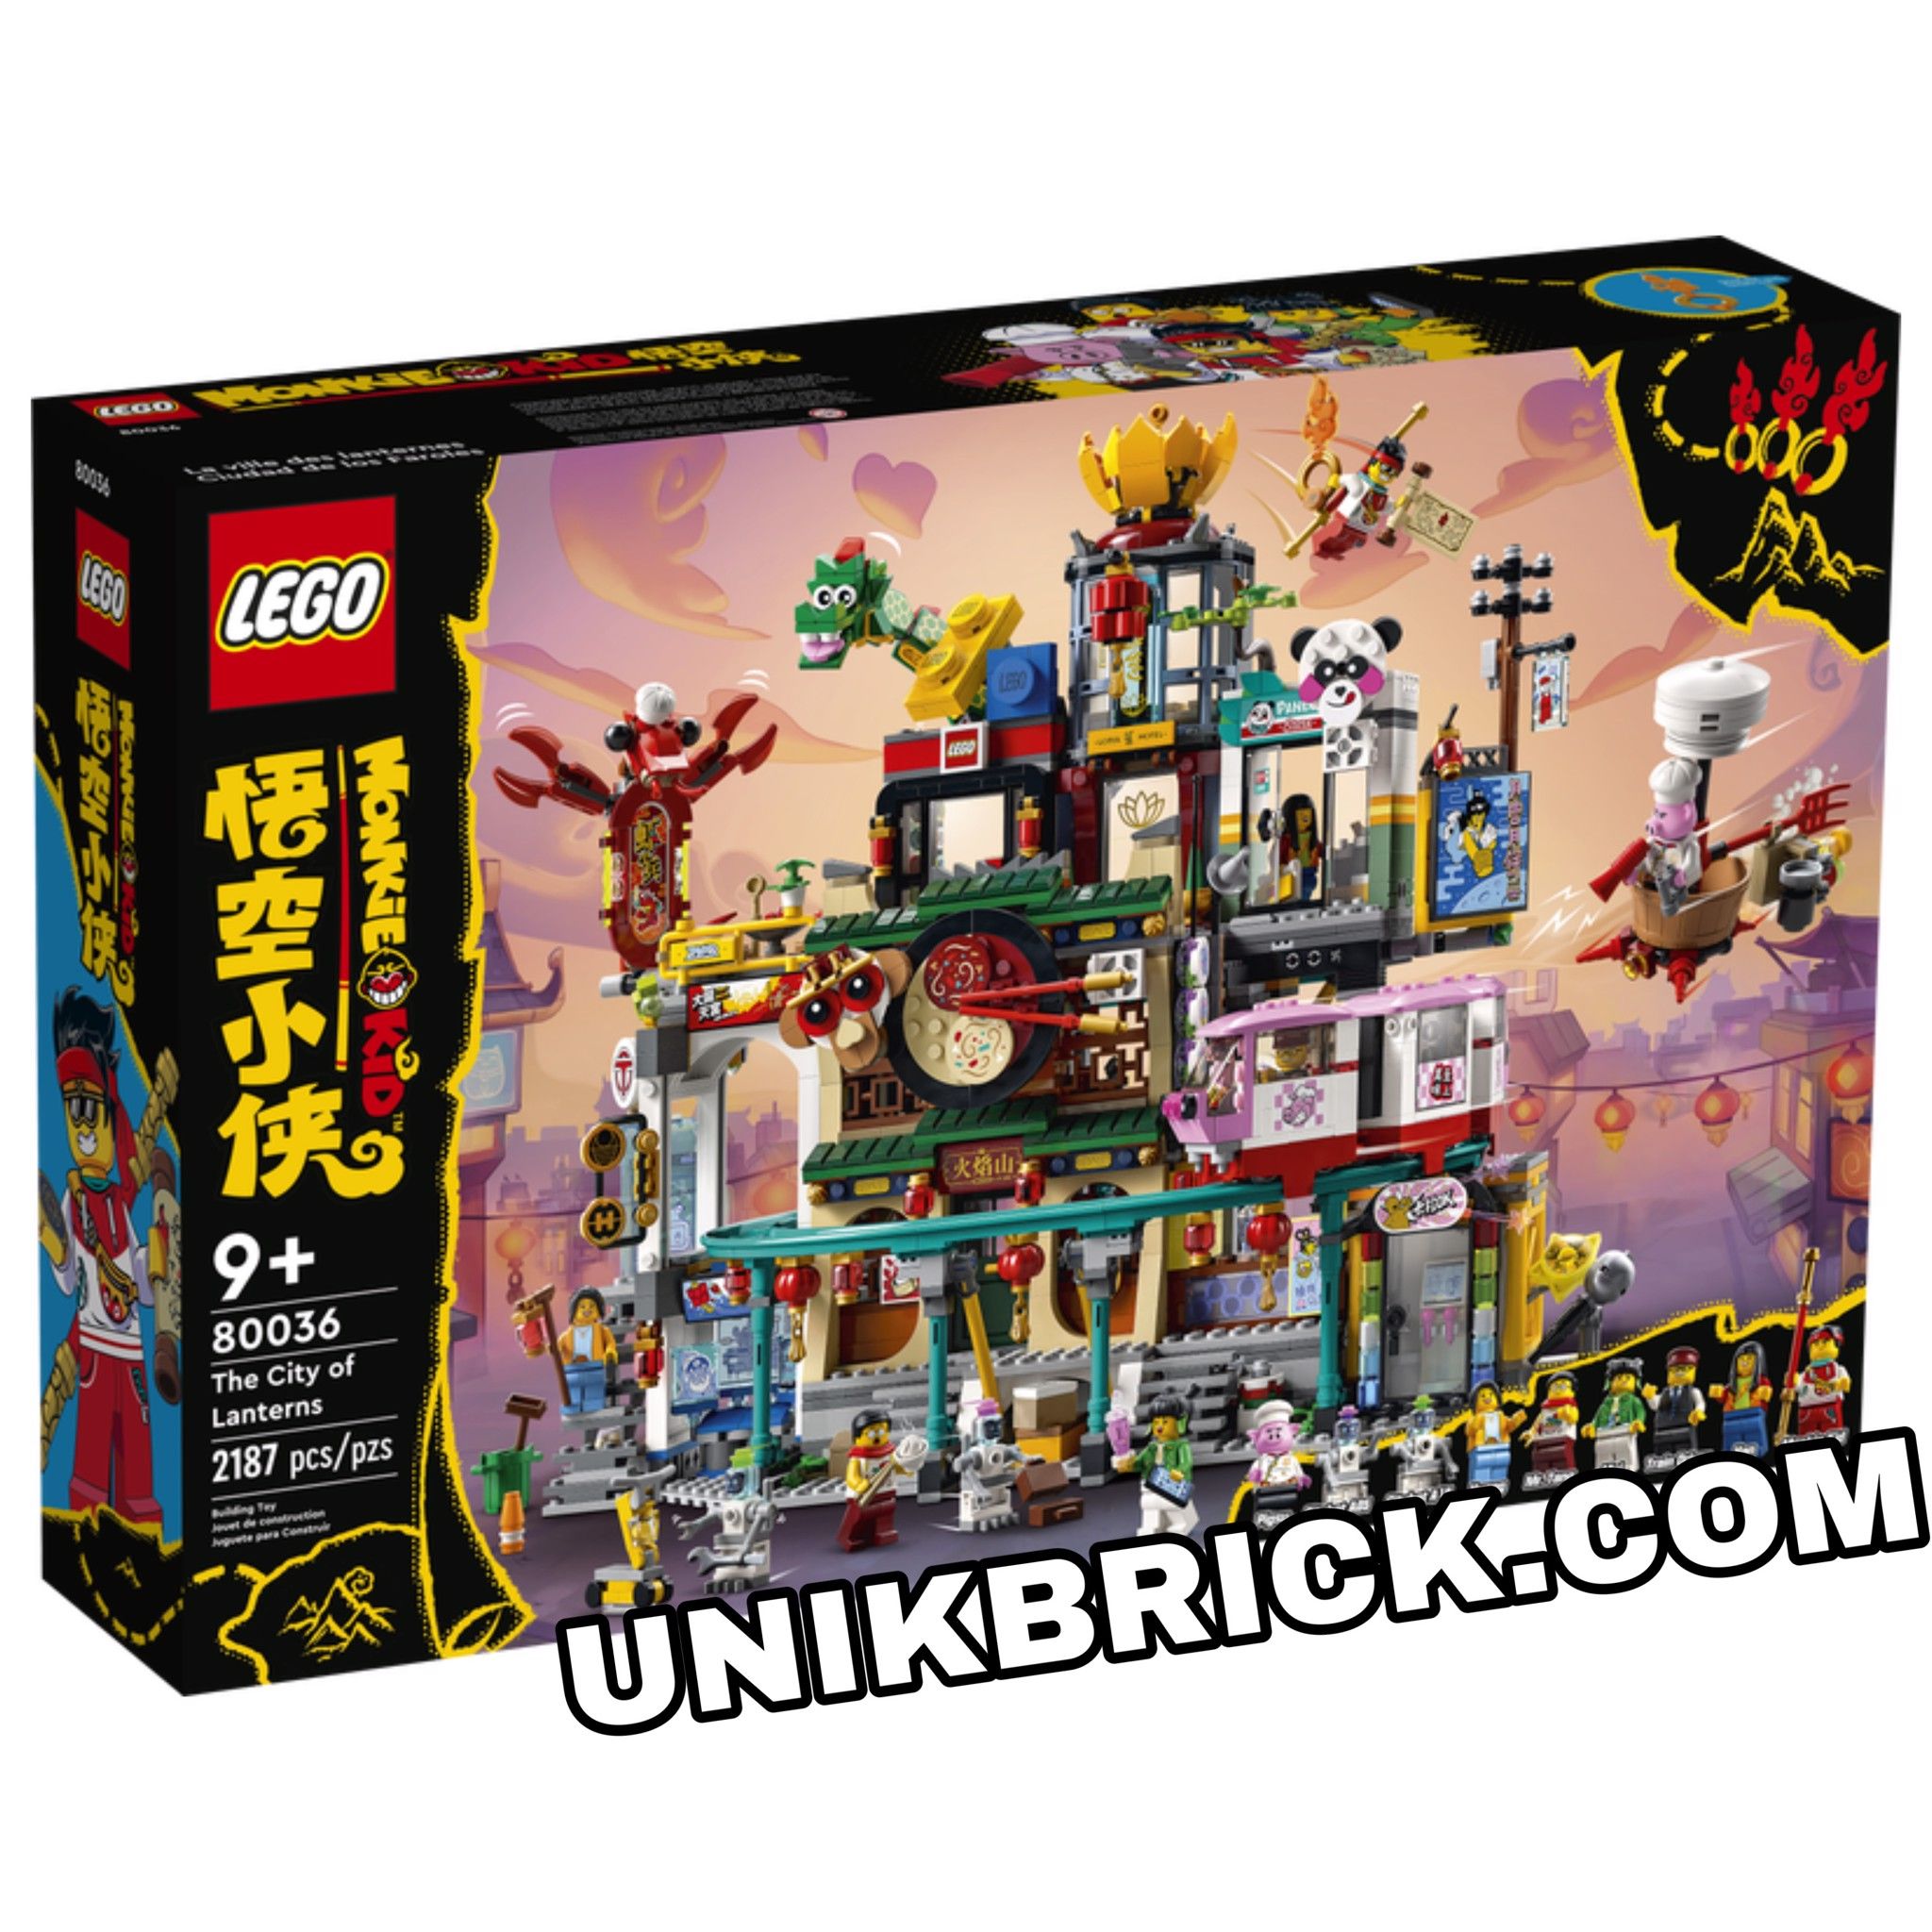 [HÀNG ĐẶT/ ORDER] LEGO Monkie Kid 80036 The City of Lanterns